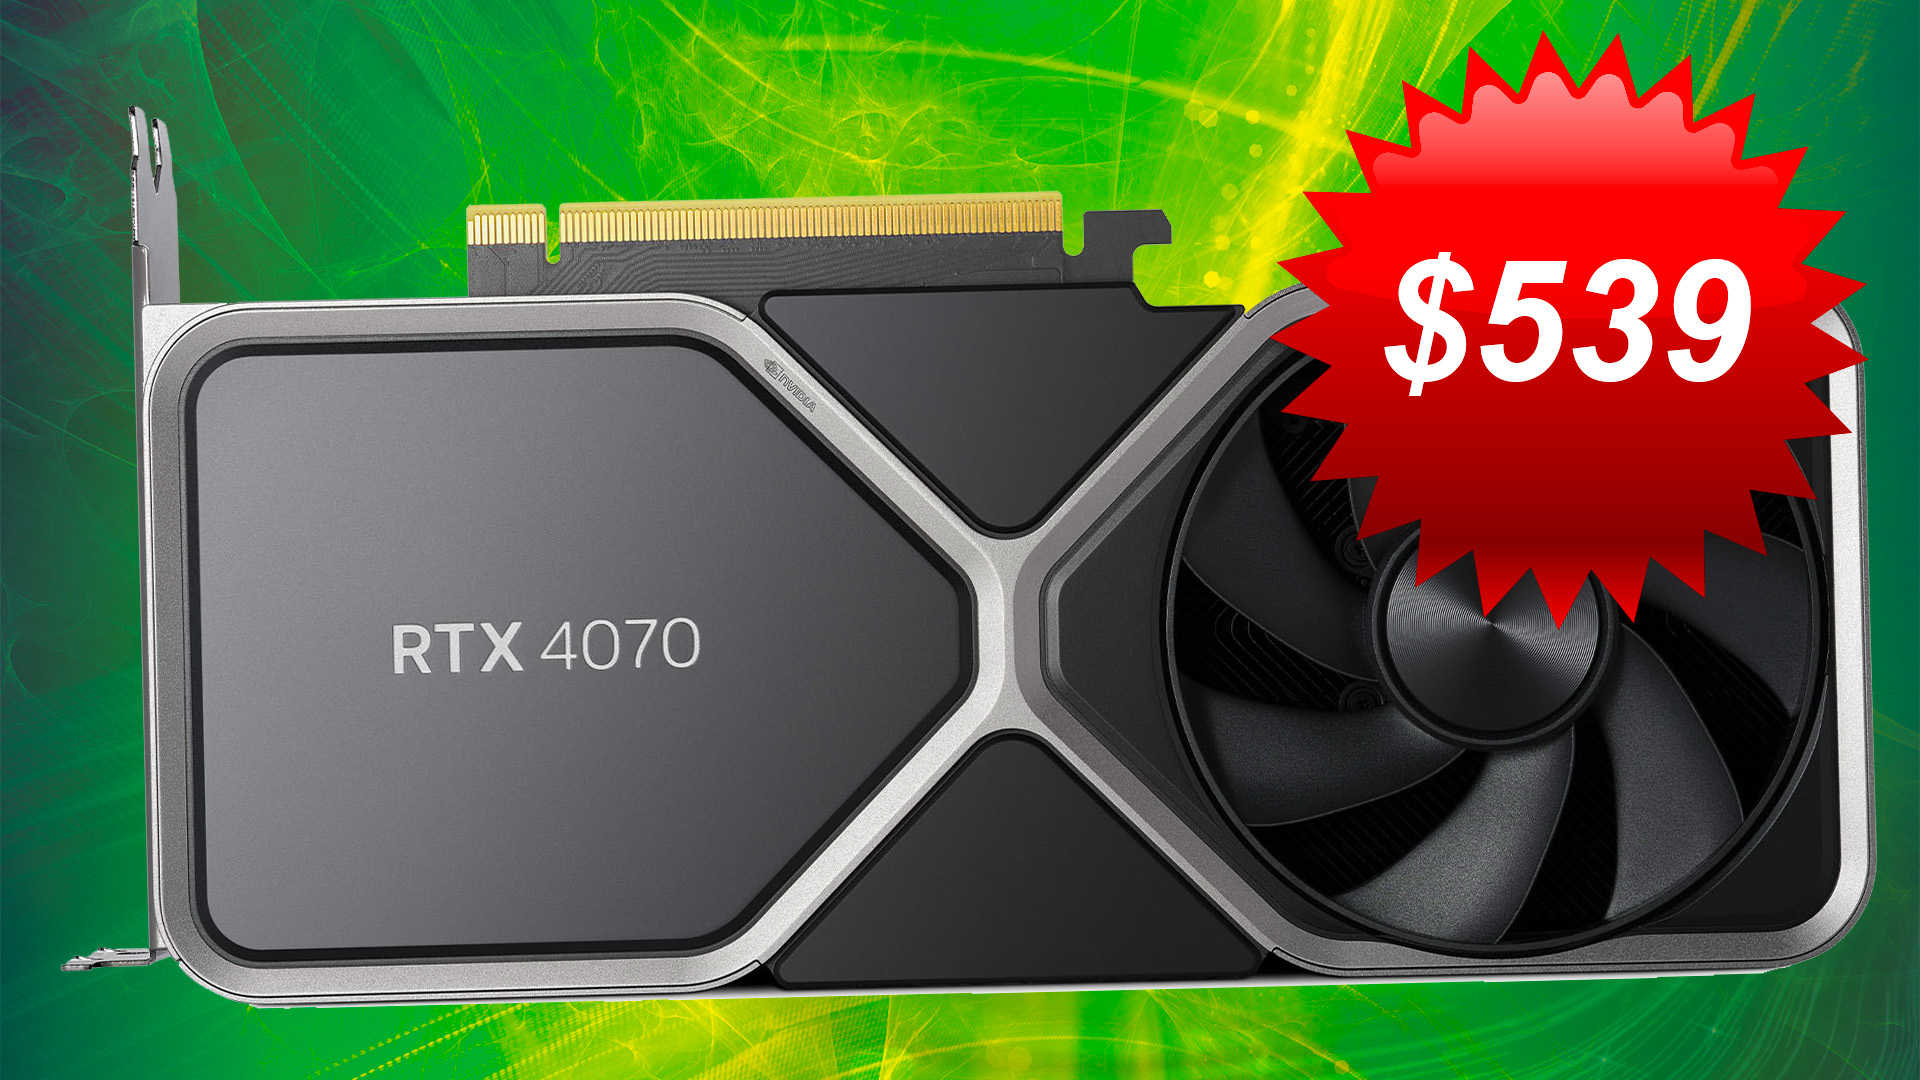 Imagine if the Nvidia GeForce RTX 4000 range wasn't a joke: RTX 4070 with $539 price tag